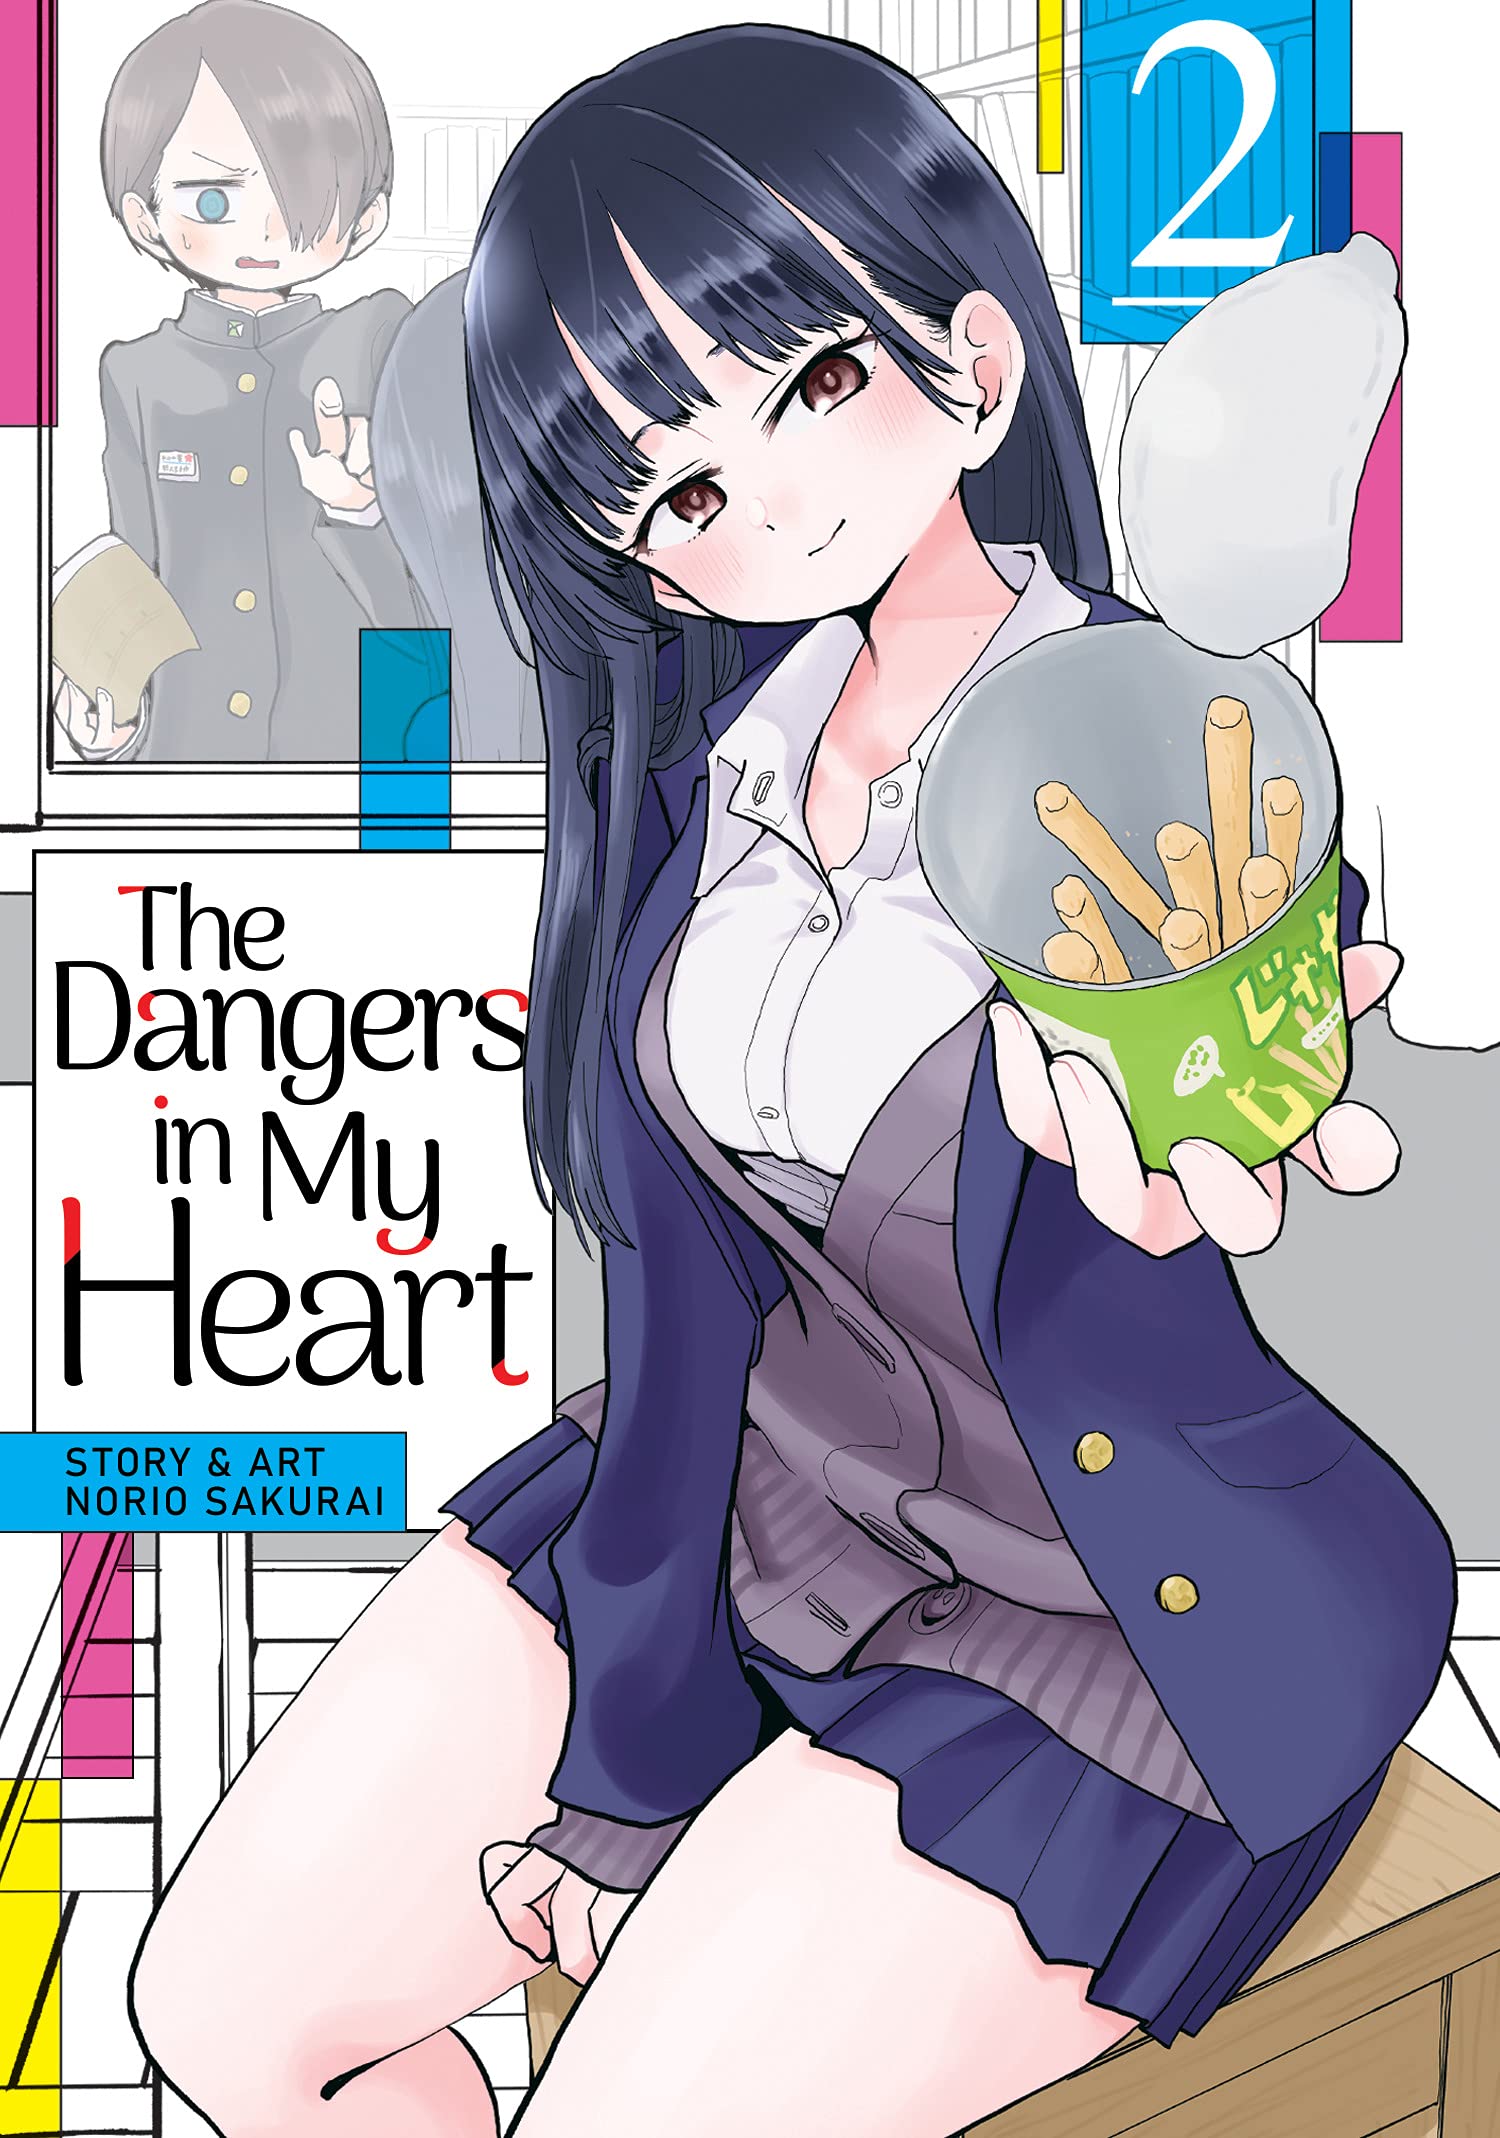 The Dangers in My Heart Manga Volume 2